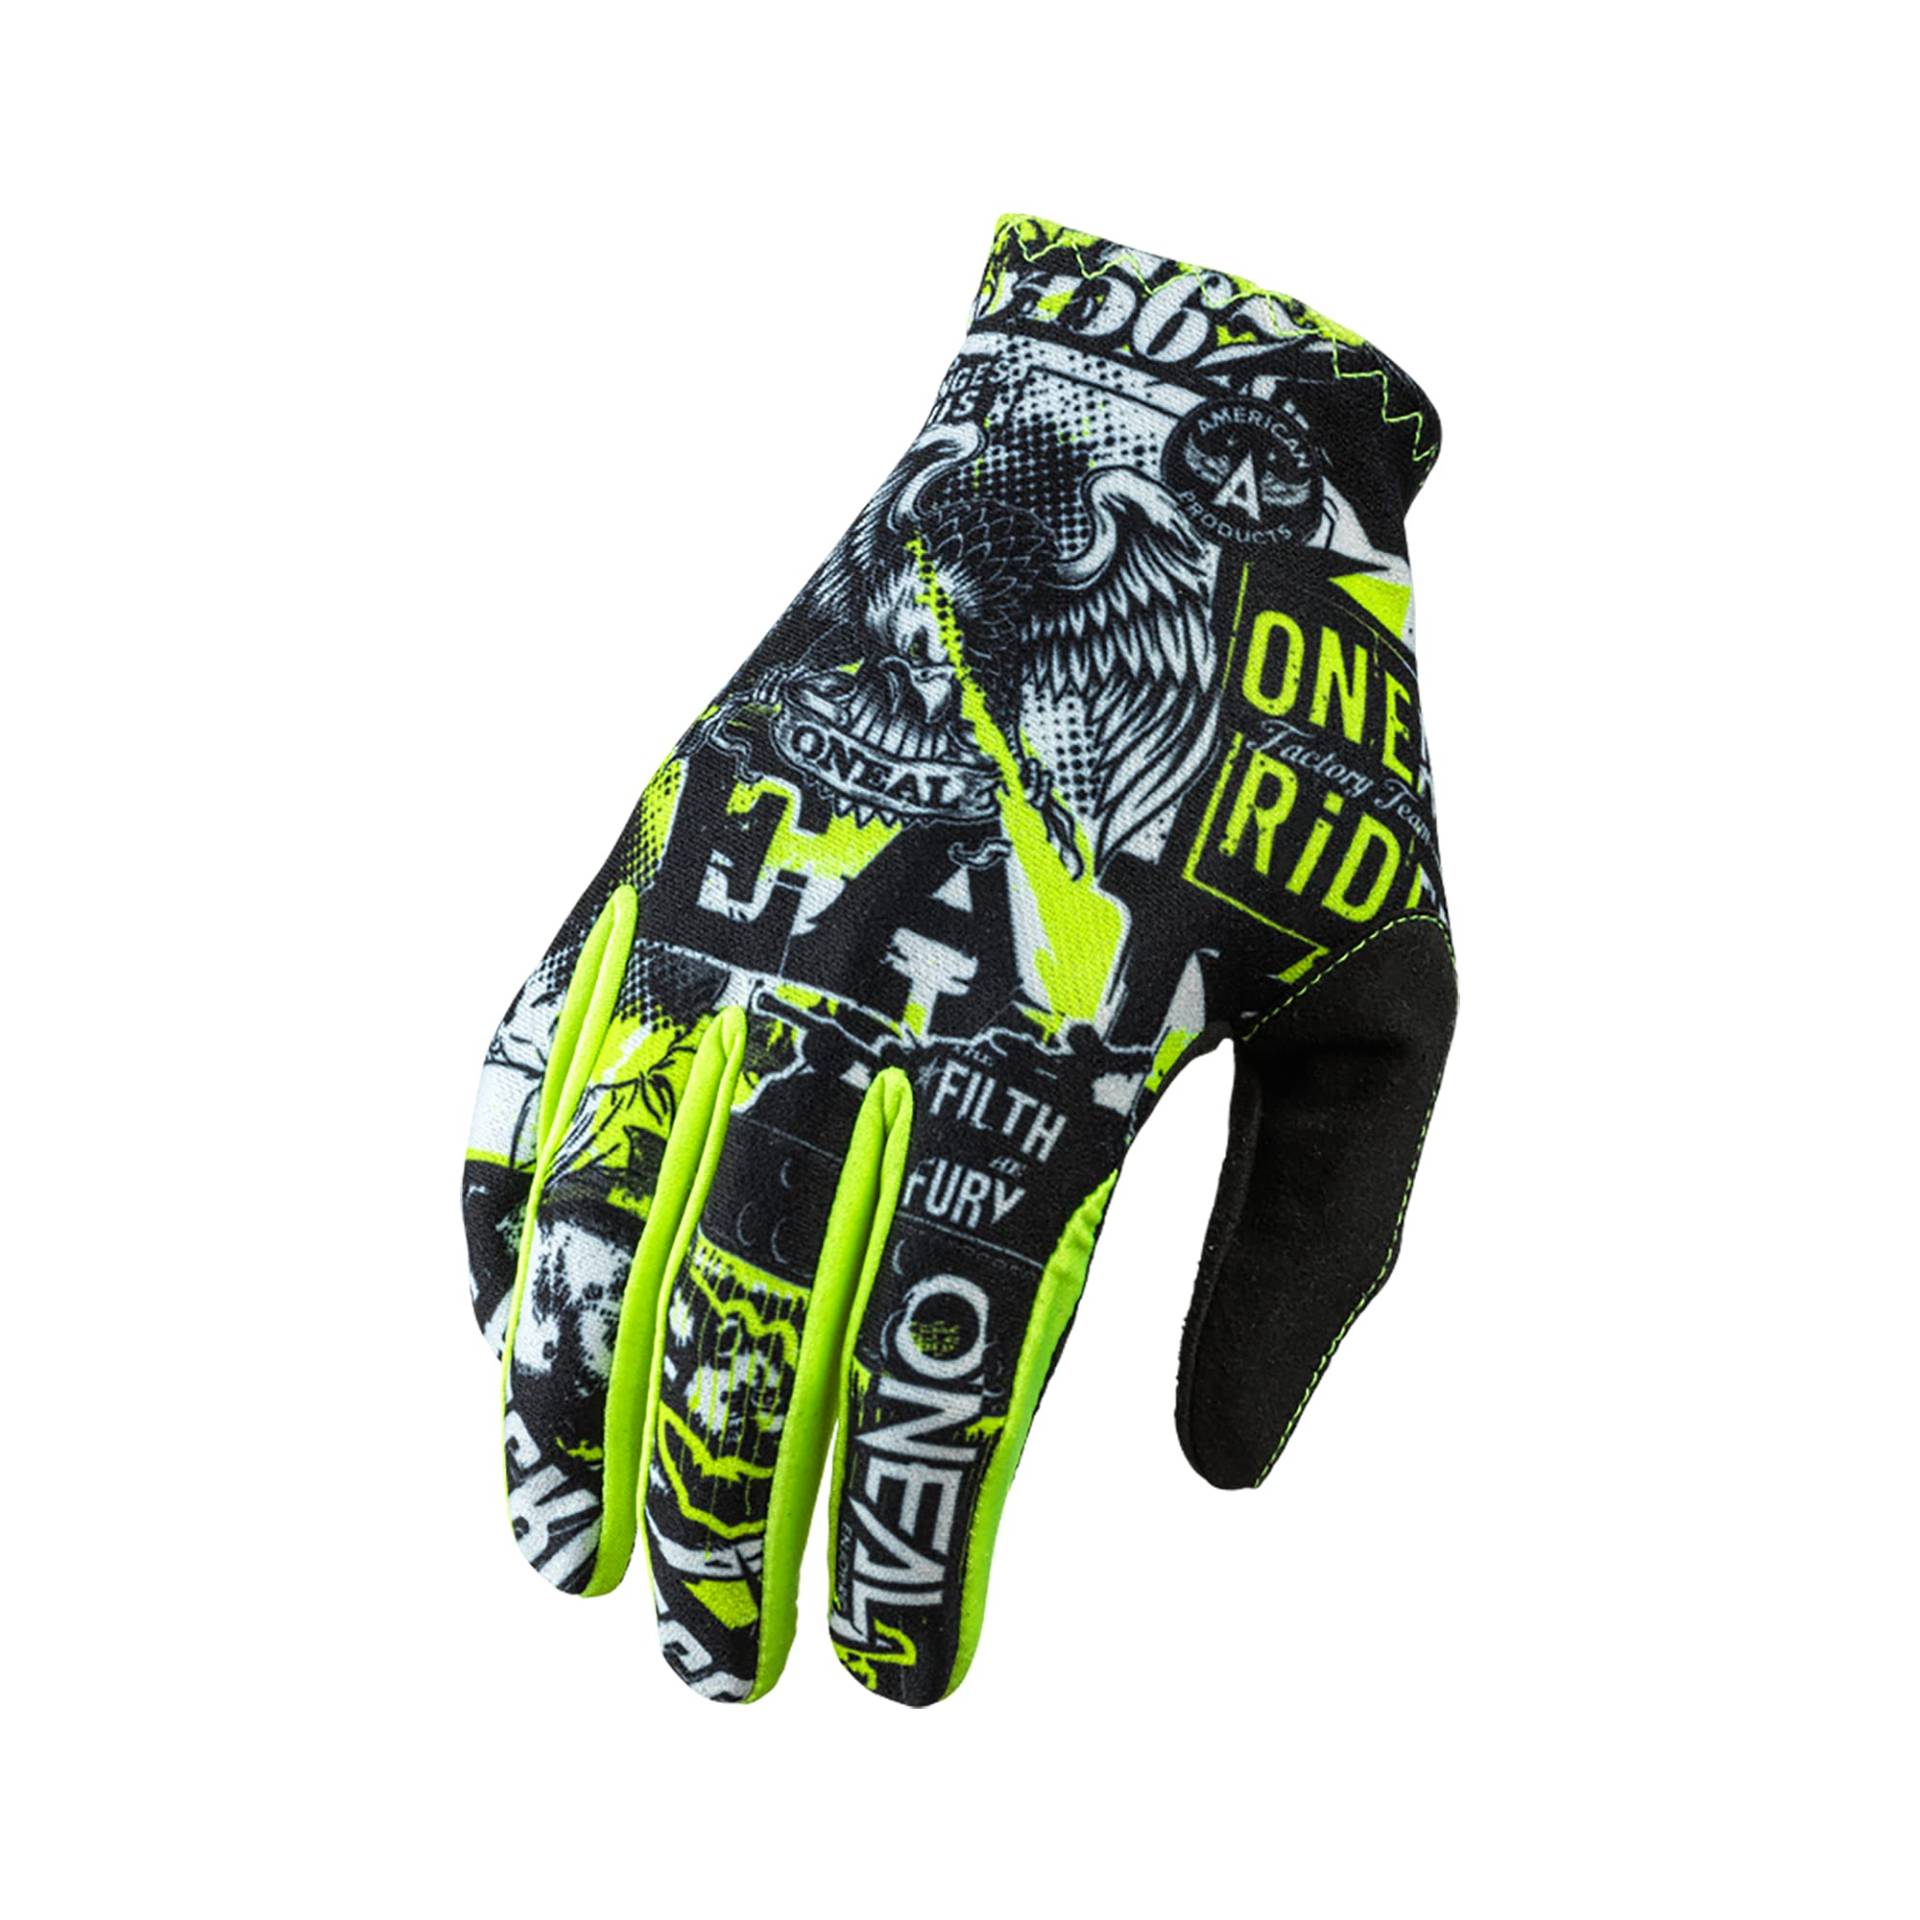 O'NEAL | Fahrrad- & Motocross-Handschuhe | Kinder | MX MTB DH FR Downhill Freeride | Langlebige, Flexible Materialien, belüftete Handoberseite | Matrix Youth Glove Attack | Bunt | Größe XL von O'NEAL